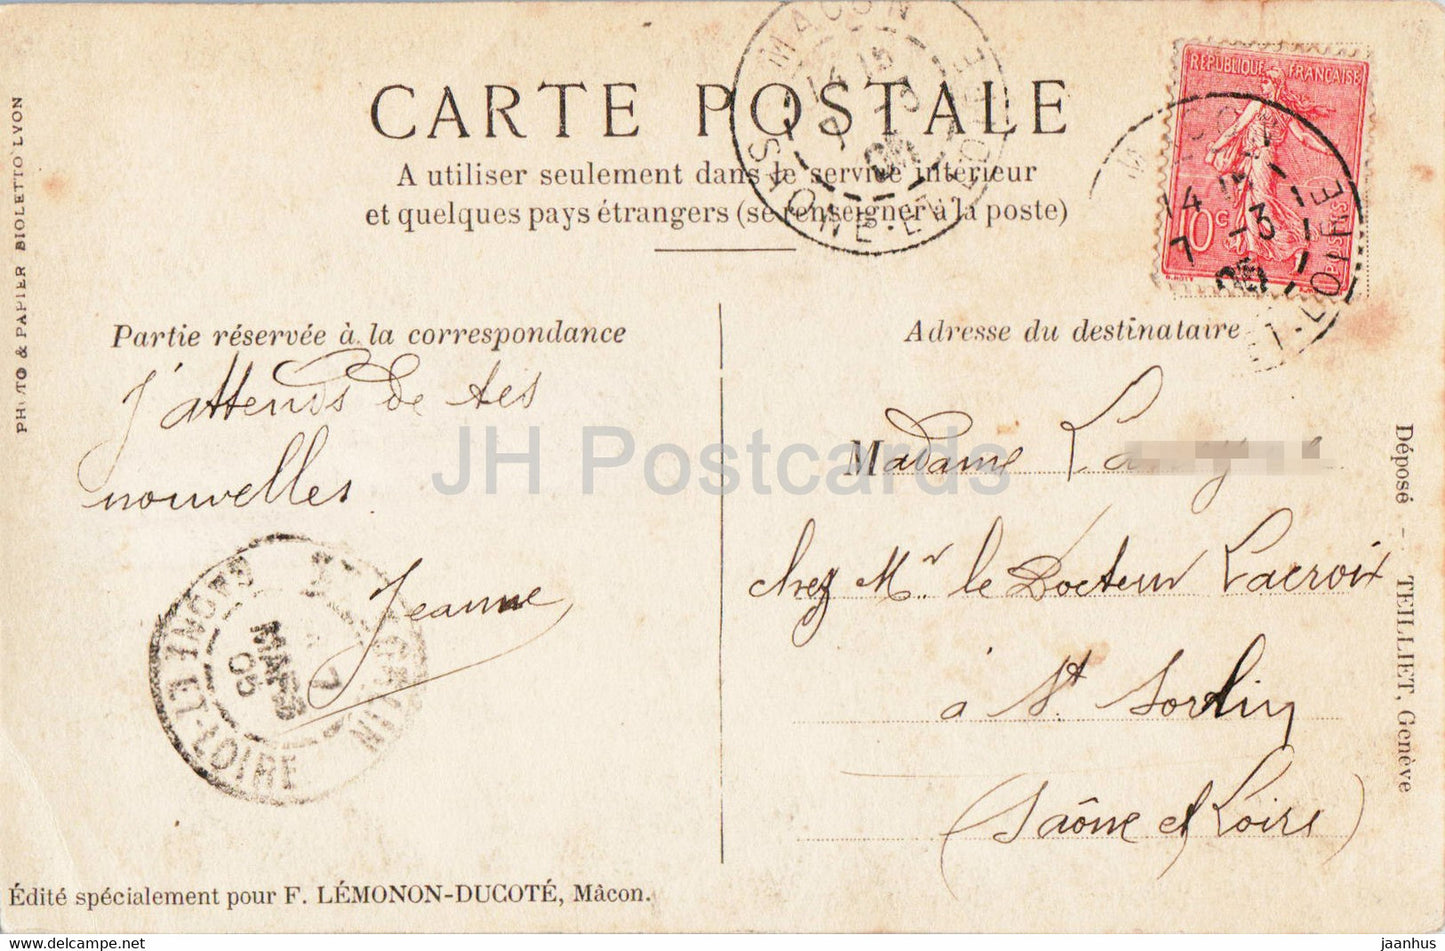 Souvenir de Macon - old postcard - 1905 - France - used